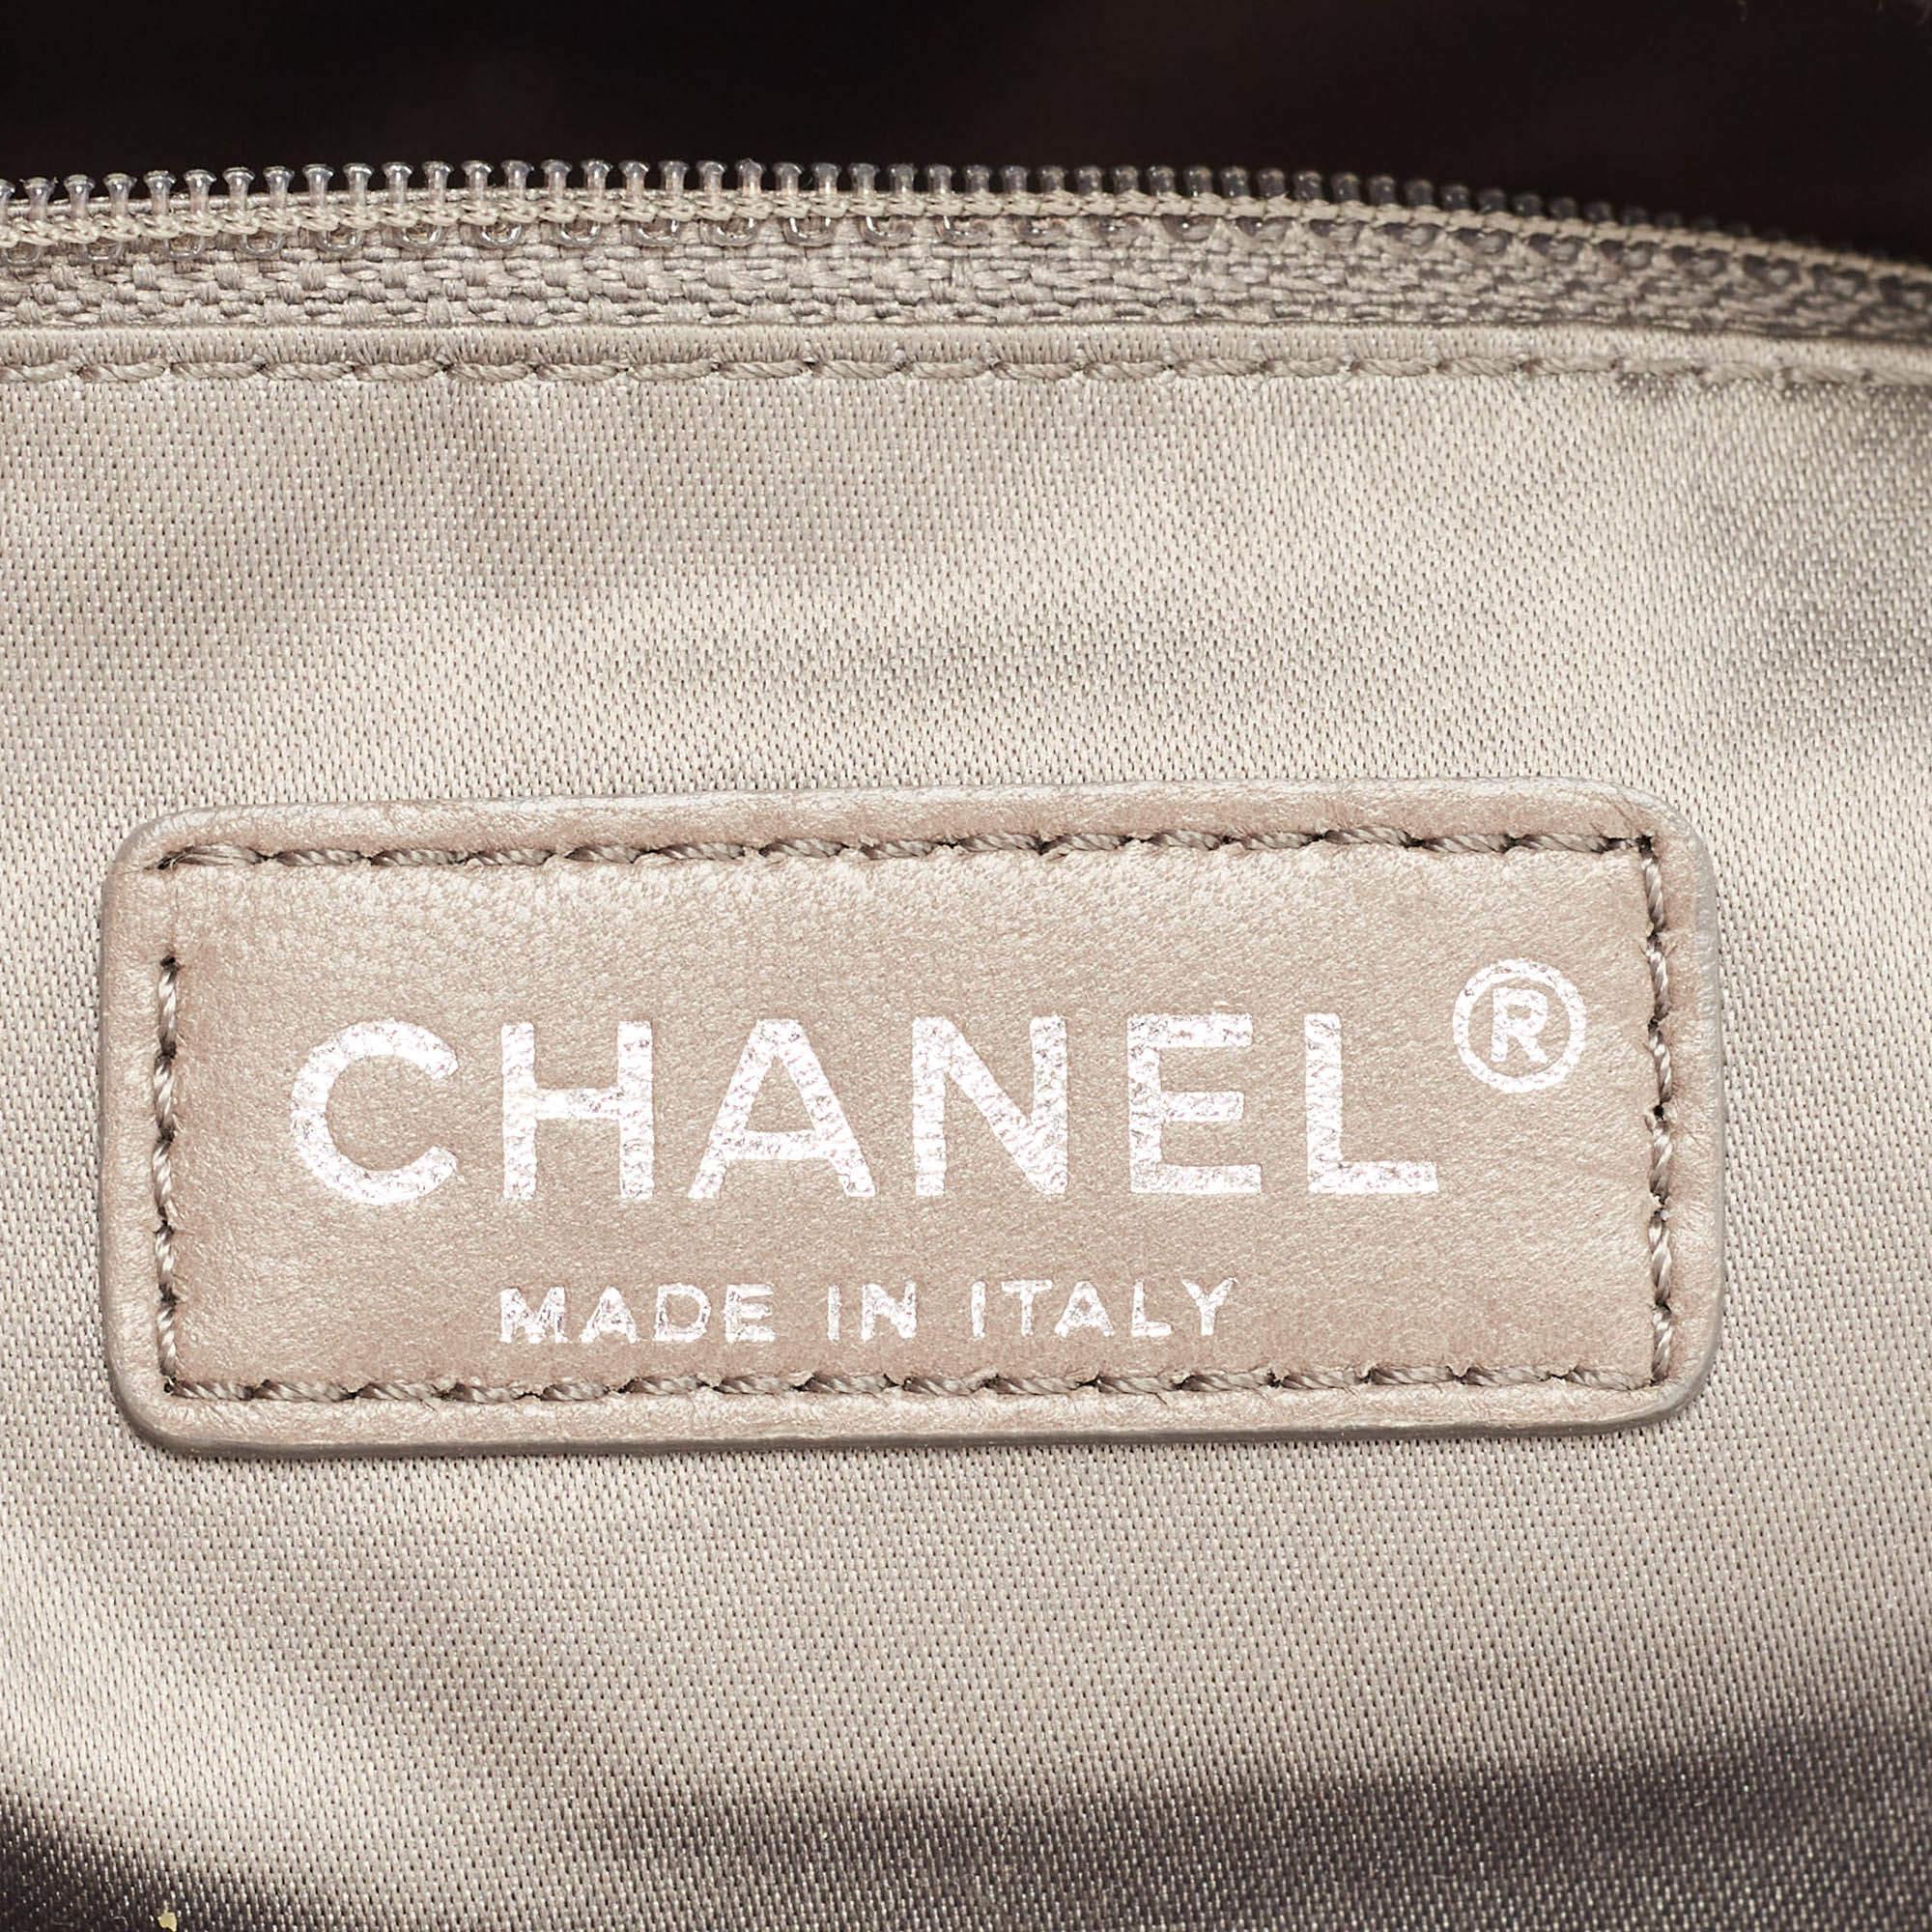 Chanel Black Matte Leather Large Luxe Ligne Bowler Bag 6